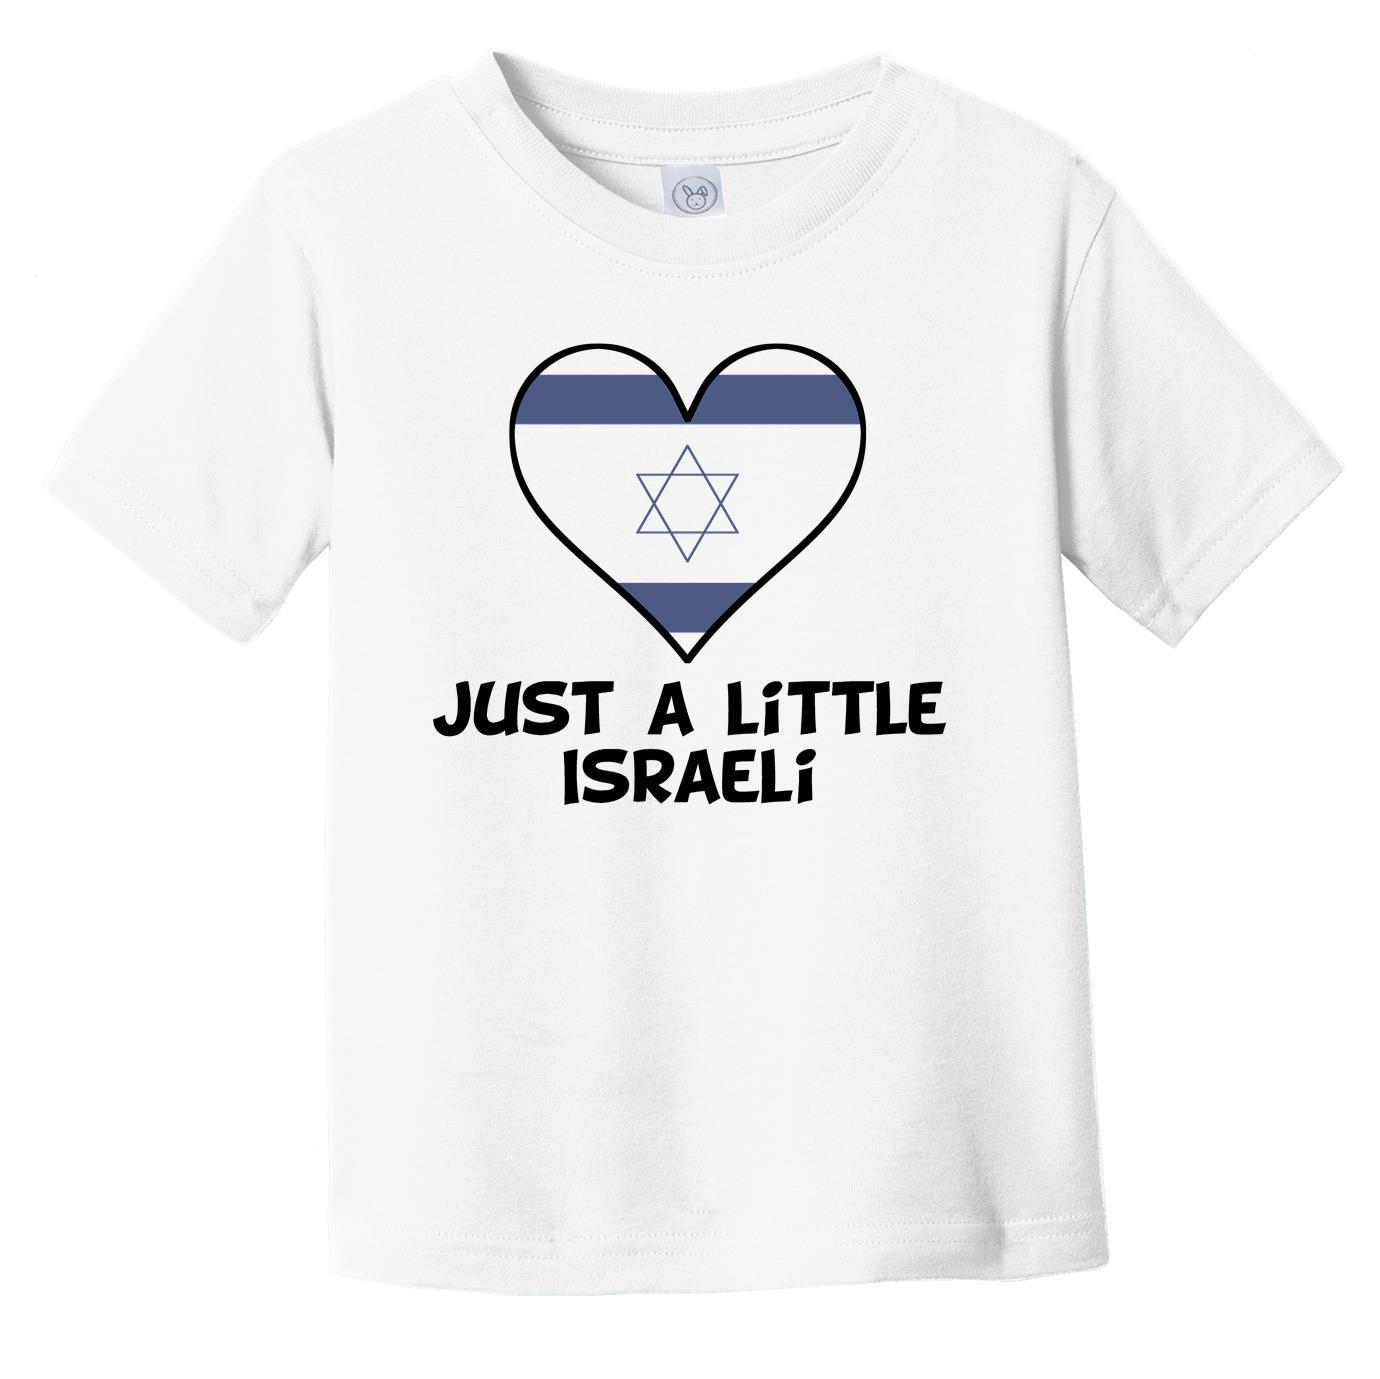 Just A Little Israeli T-Shirt - Funny Israel Flag Infant Toddler Shirt